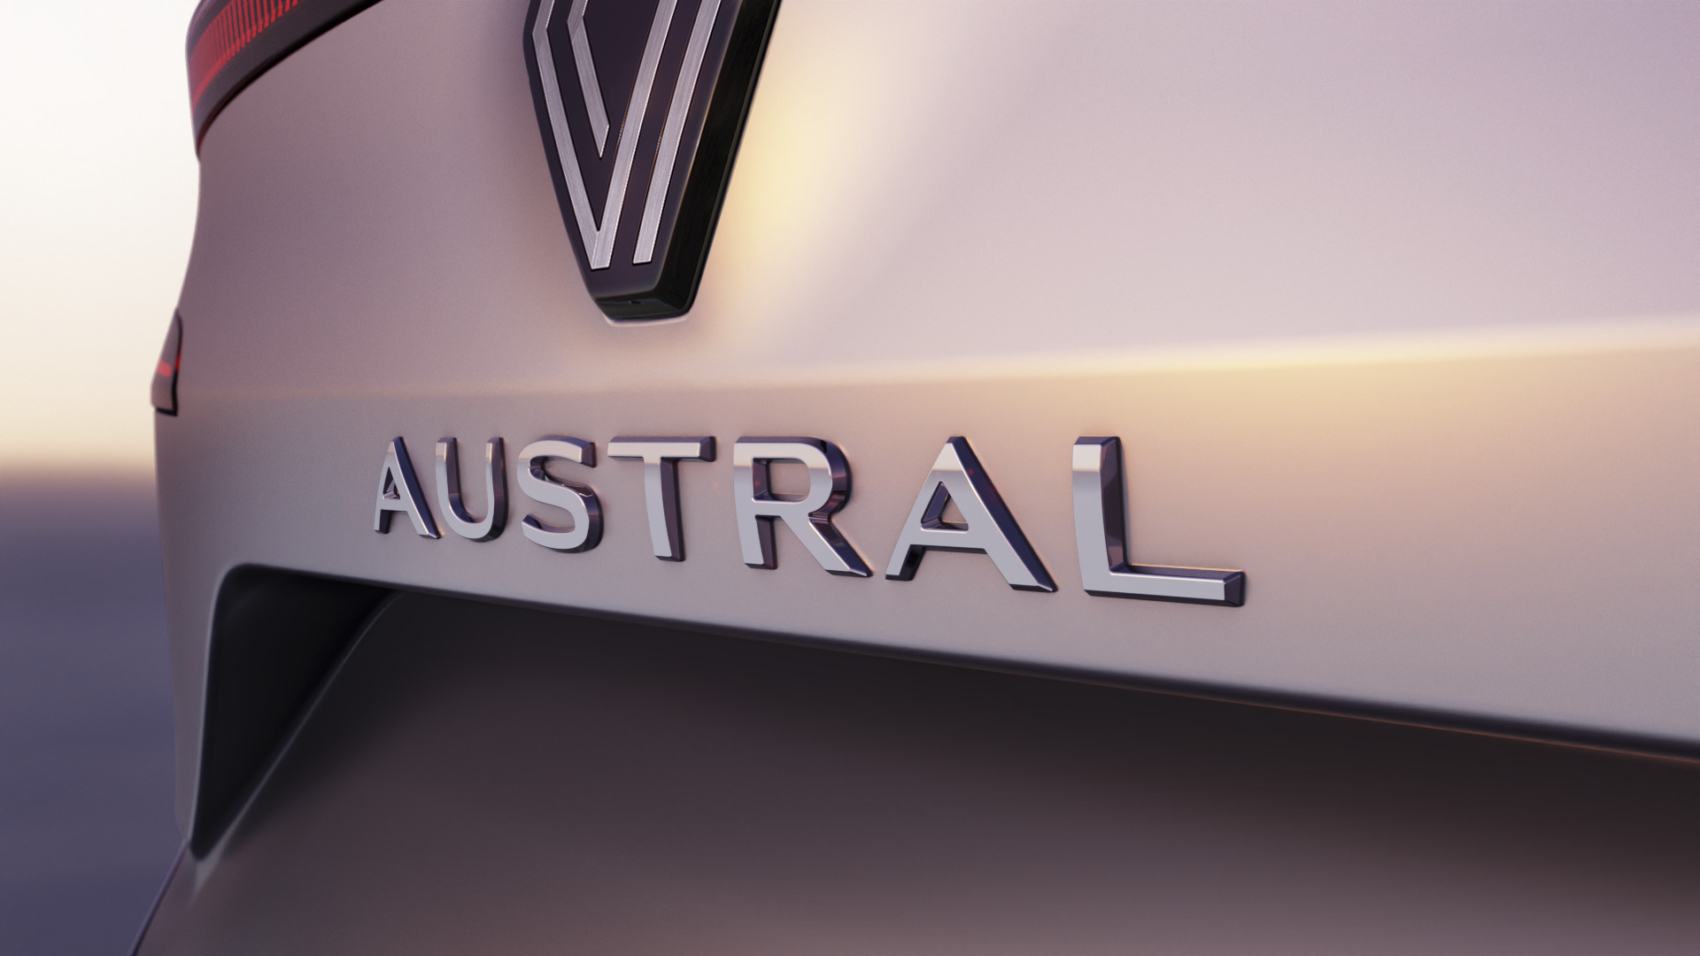 2022 Renault Austral hybrid teaser